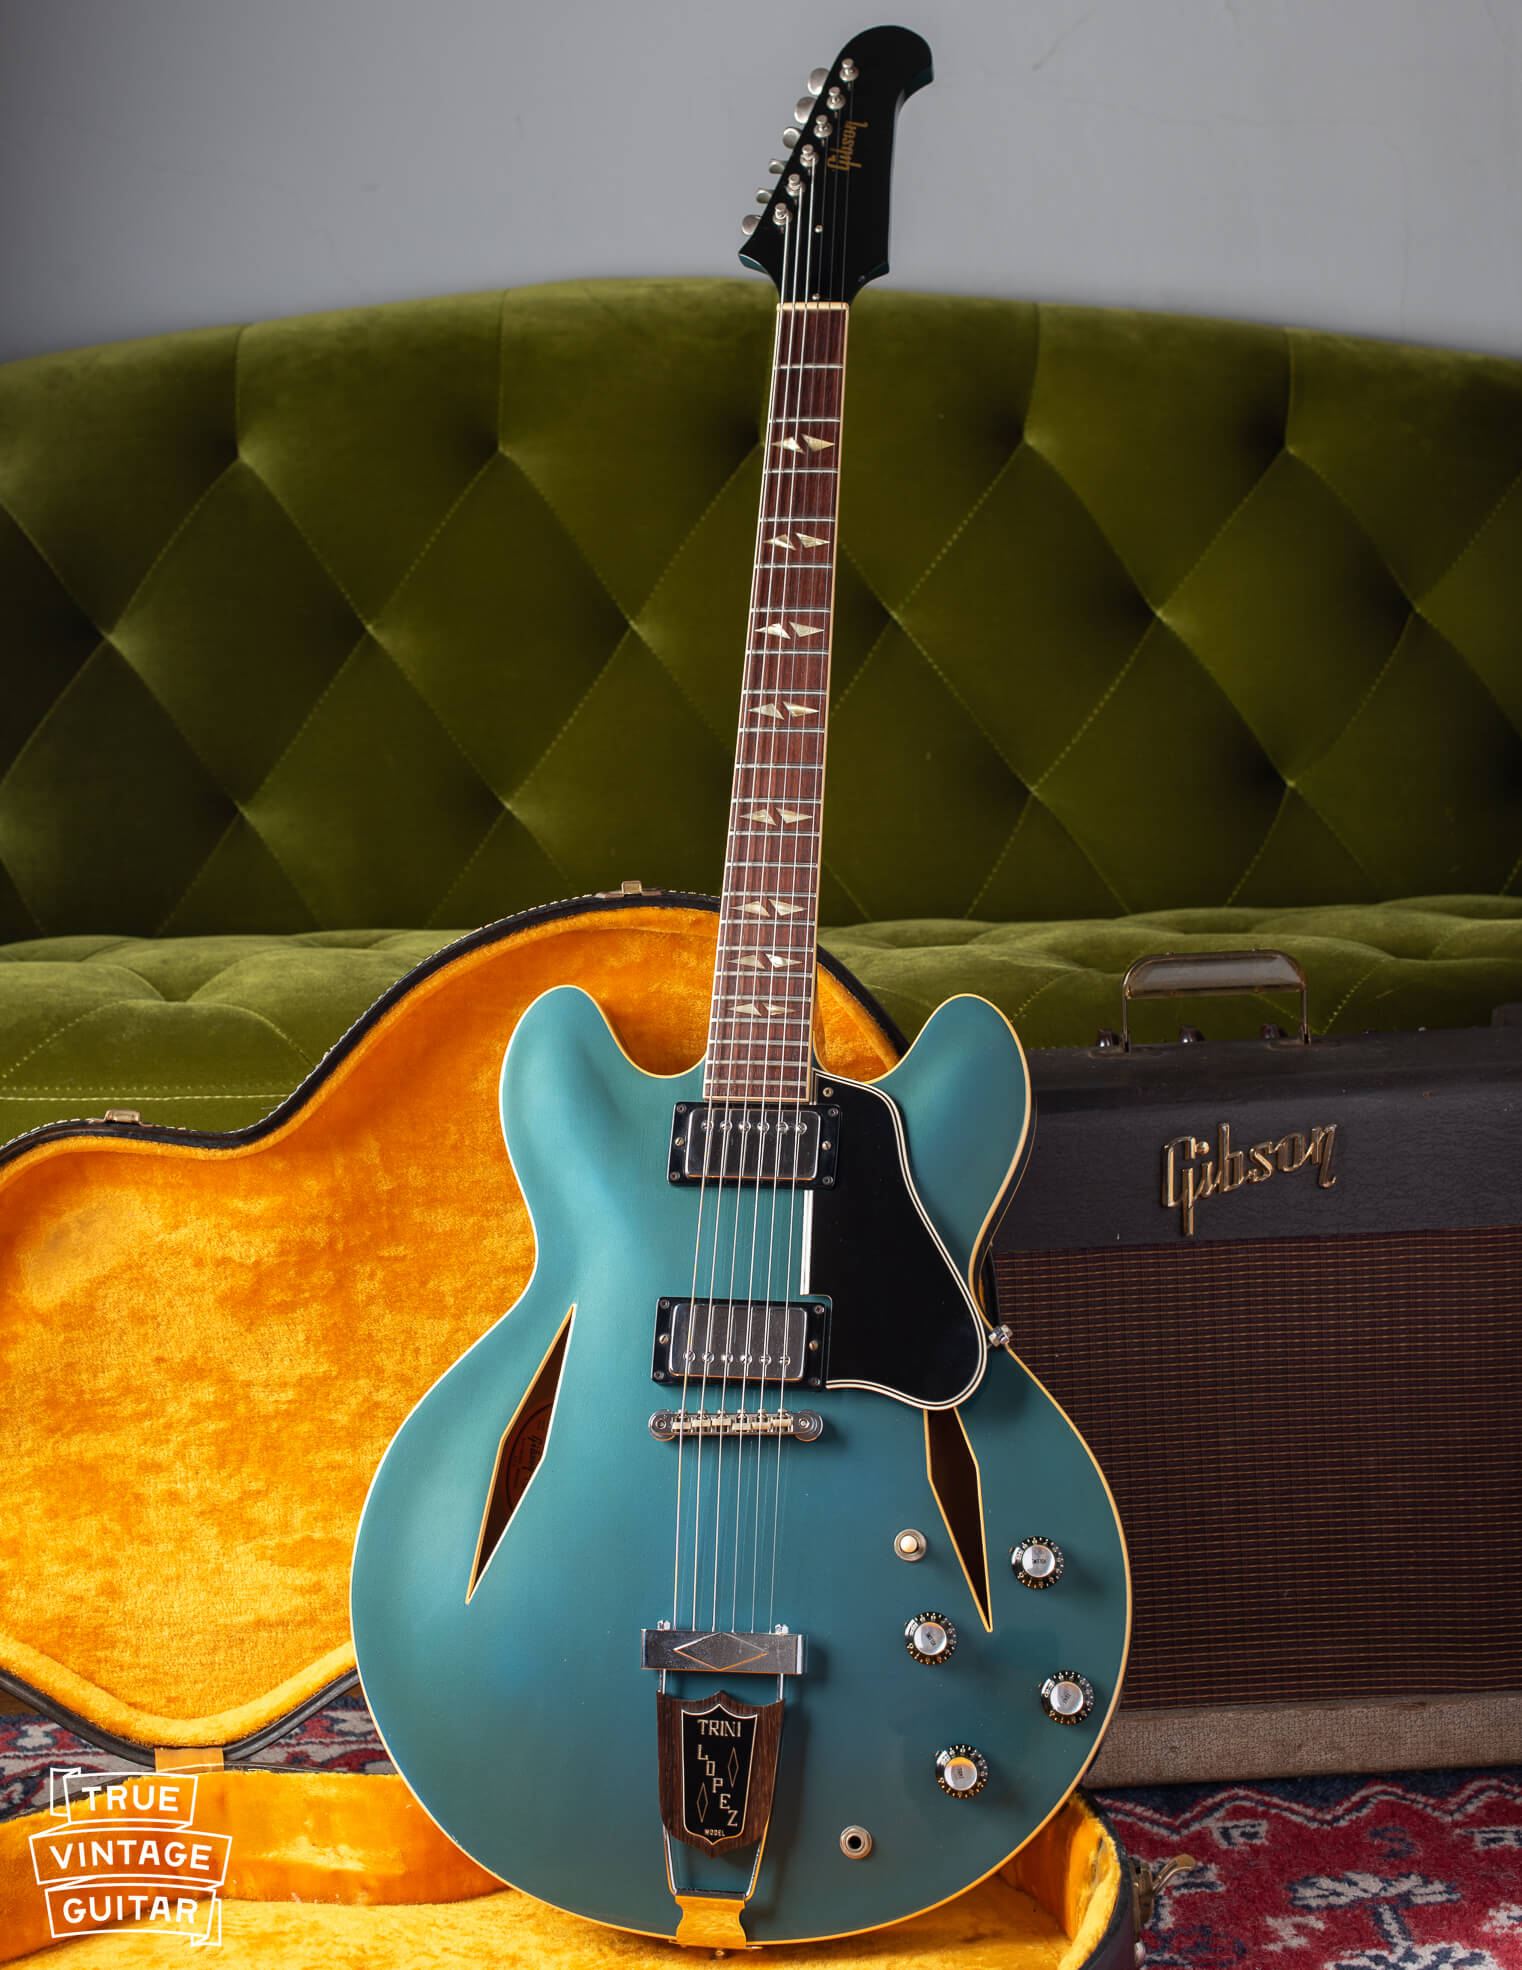 Original Gibson trini lopez guitar with Pelham Blue finish from 1960s